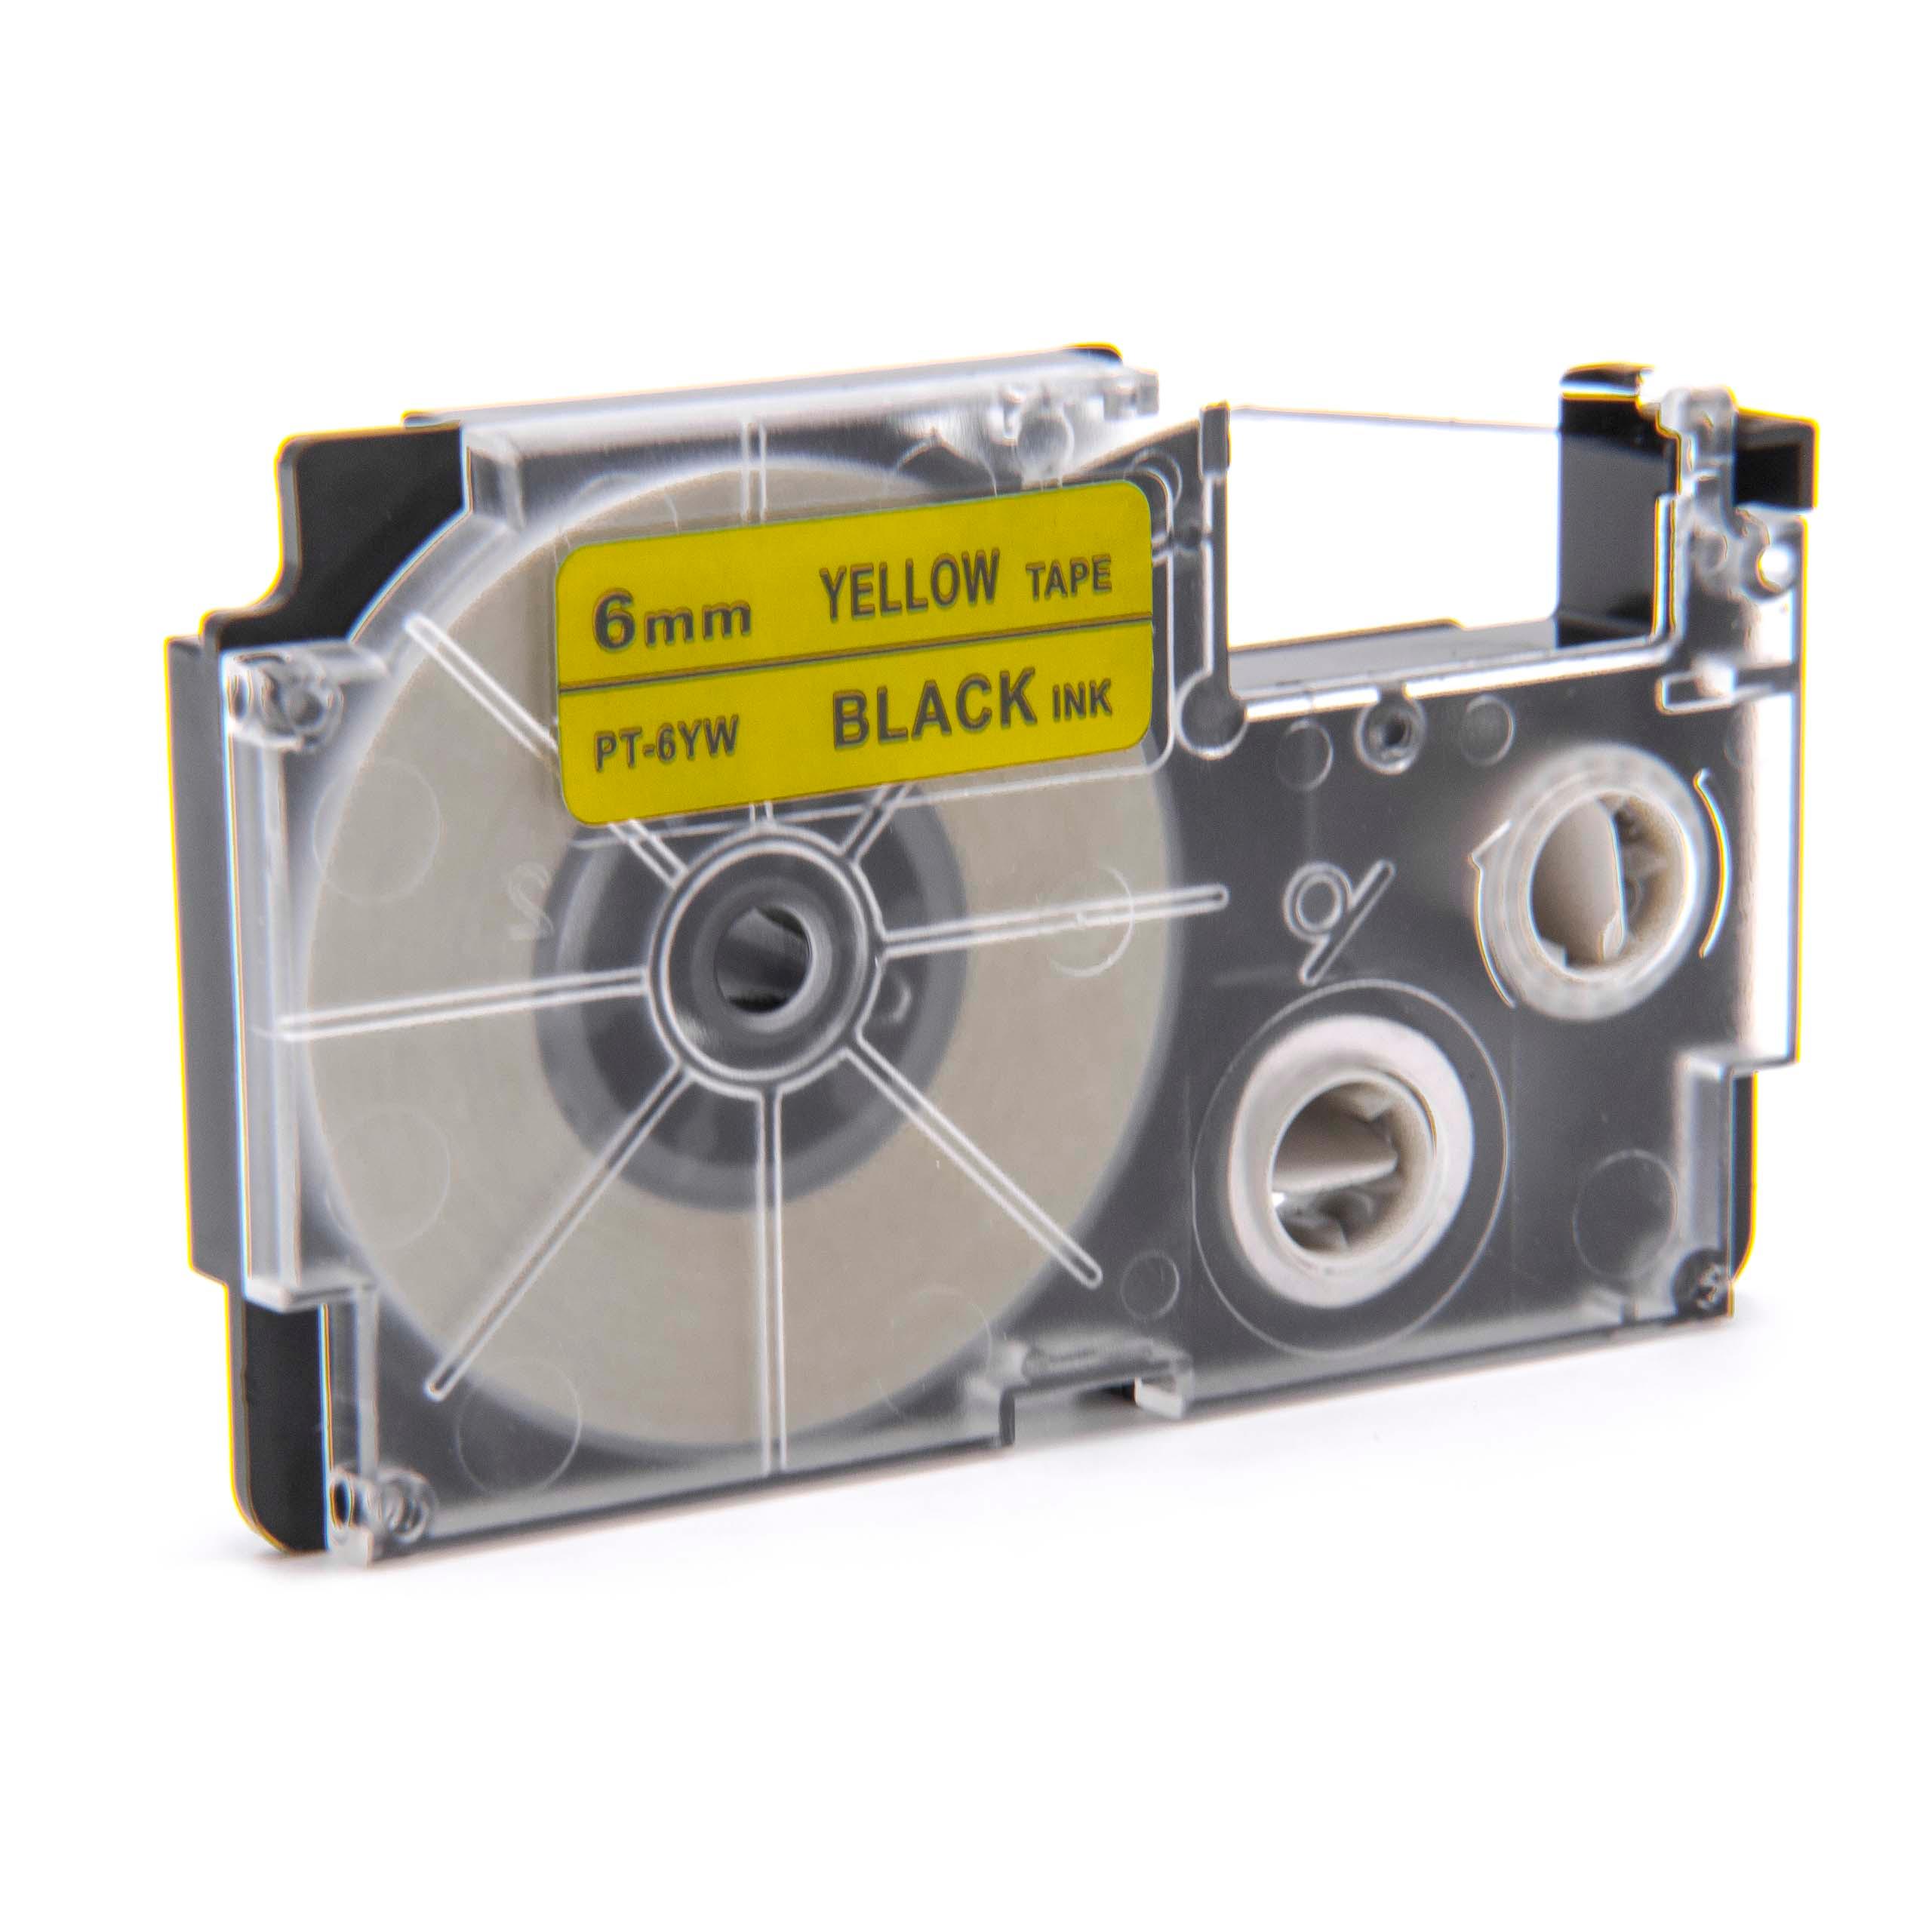 Cassetta nastro sostituisce Casio XR-6YW1, XR-6YW per etichettatrice Casio 6mm nero su giallo